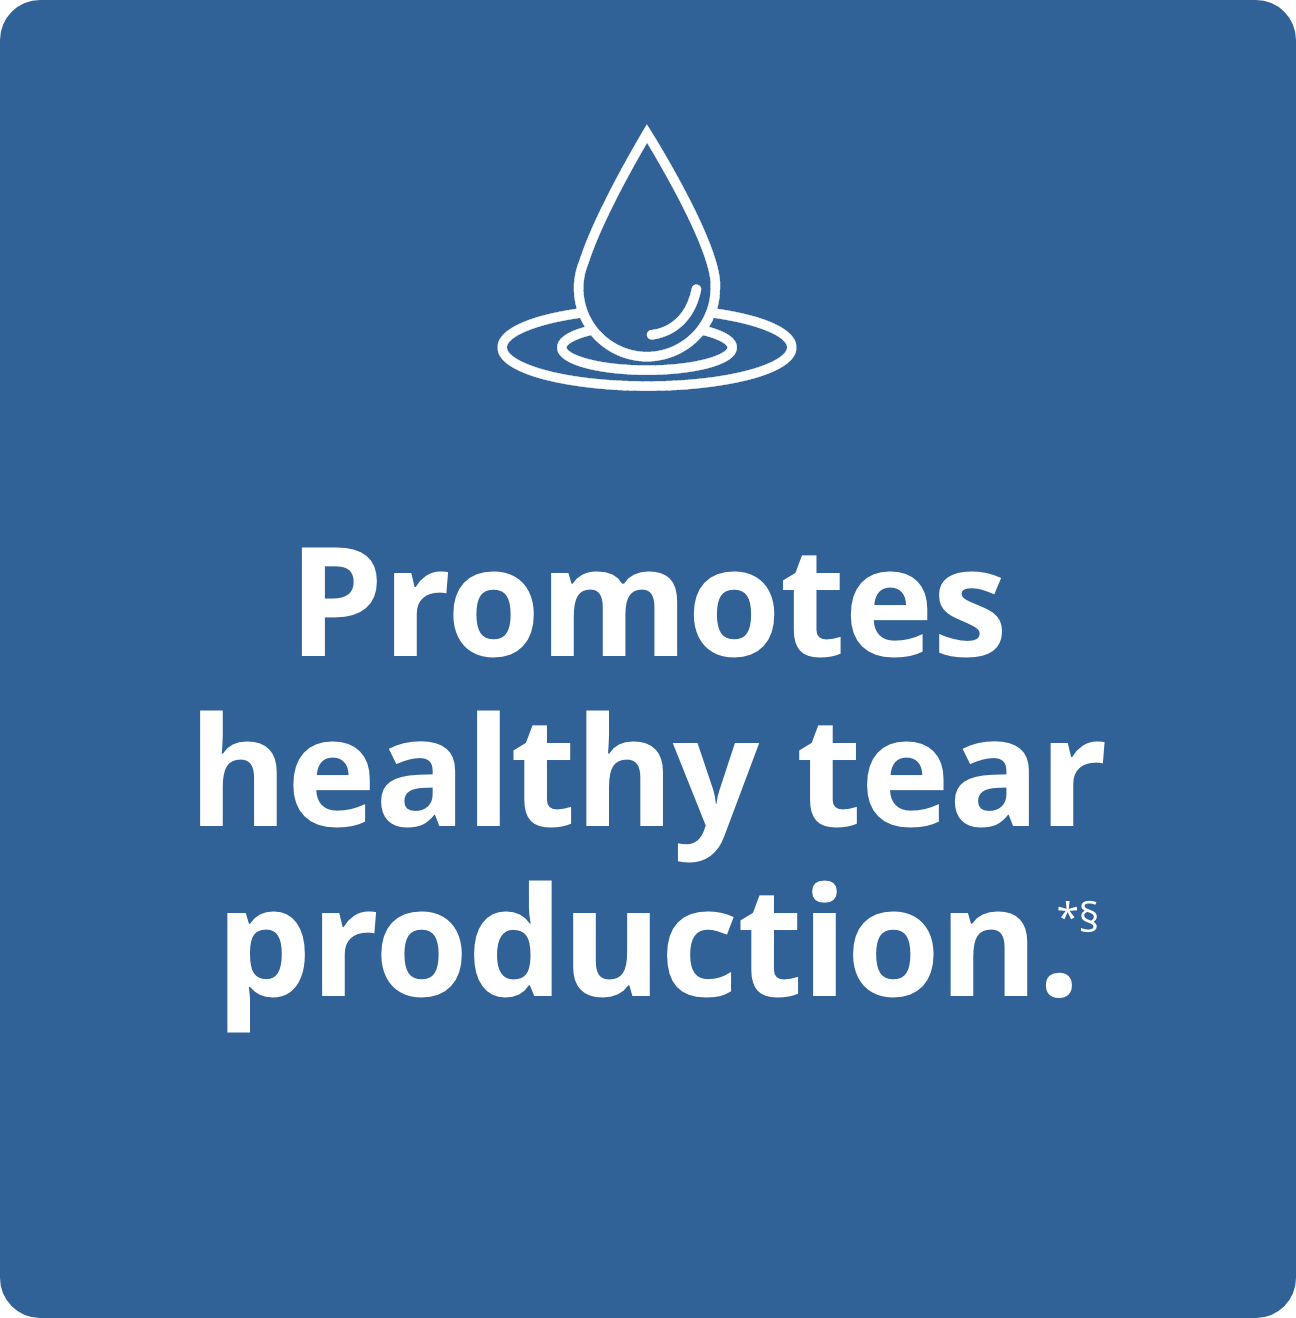 Healthy tear production claim against blue background